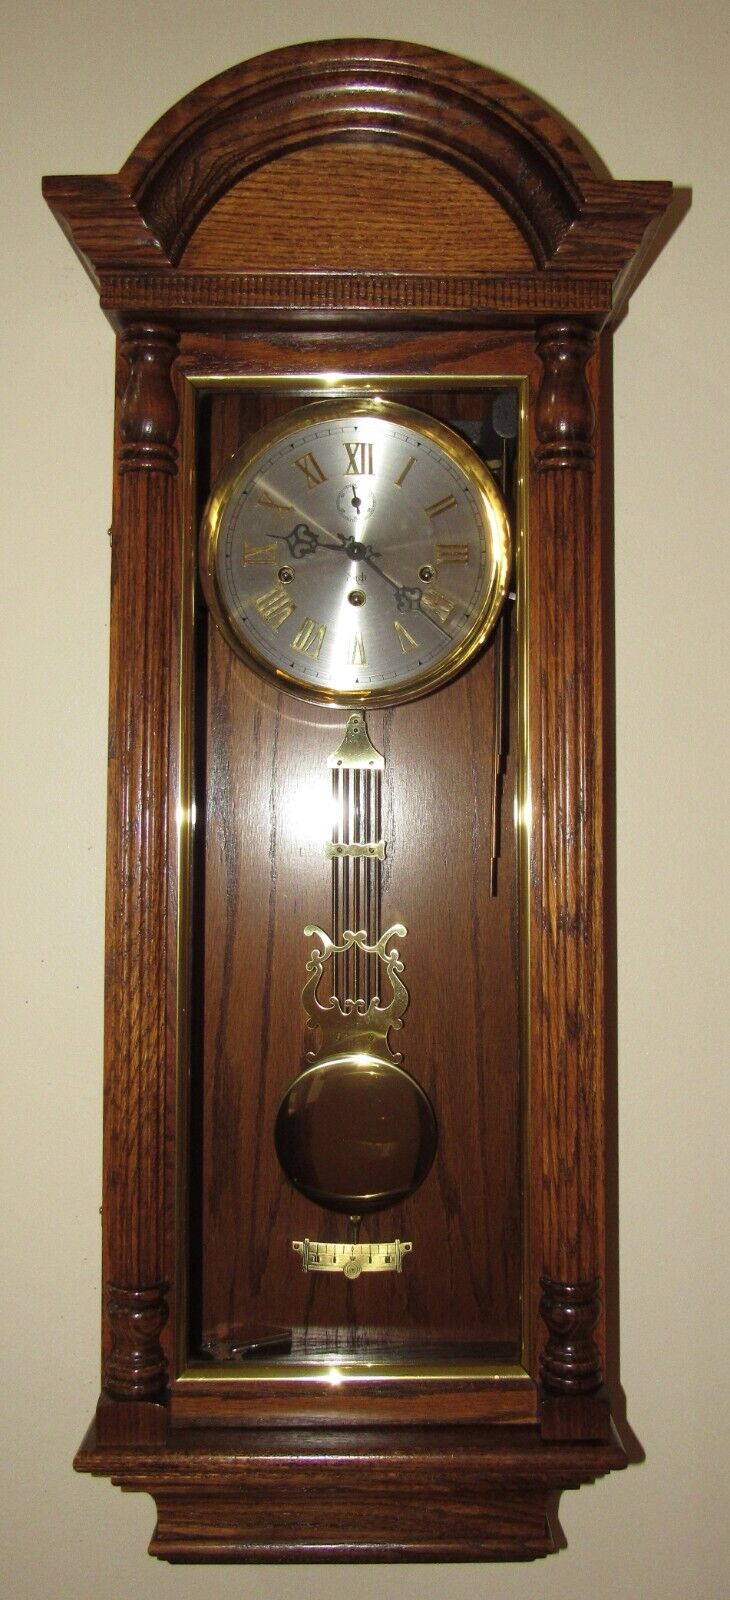 Sligh Quarter Hour Westminster Chime Wall Clock 8-Day, key-wind